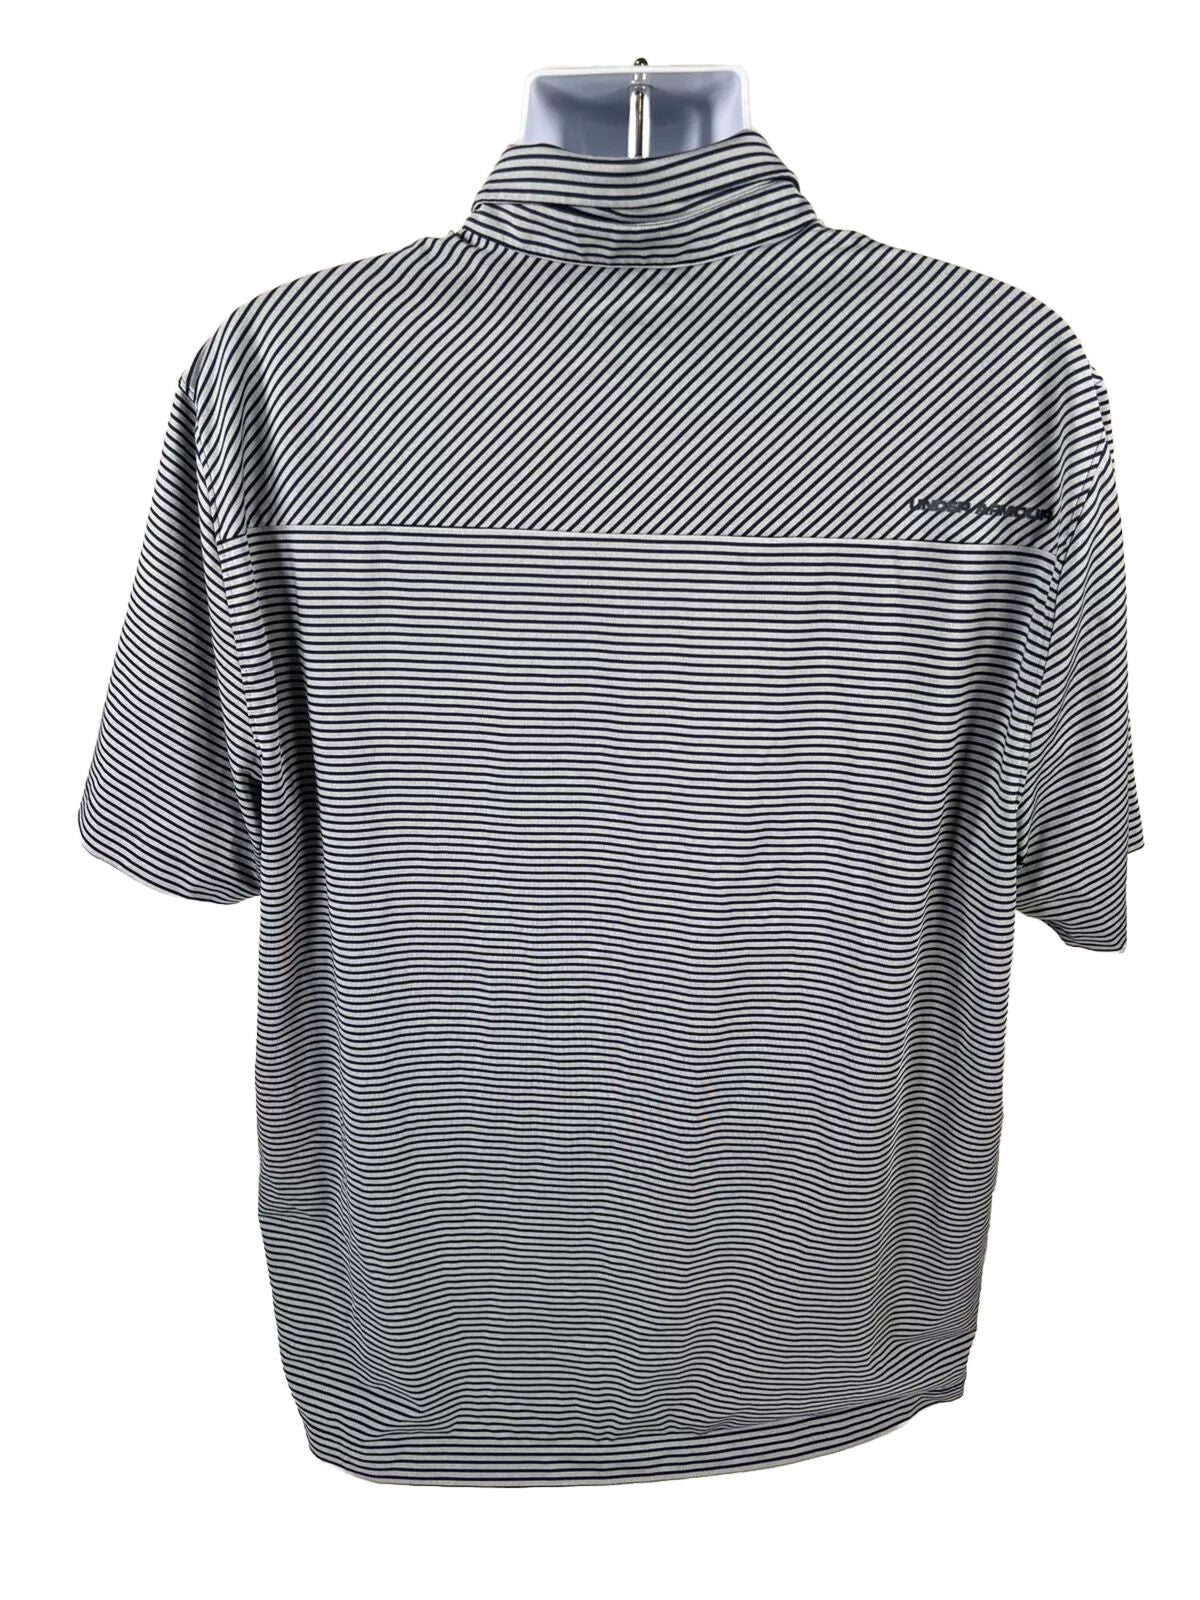 Under Armour Men's Gray Striped HeatGear Golf Polo Shirt - 2XL